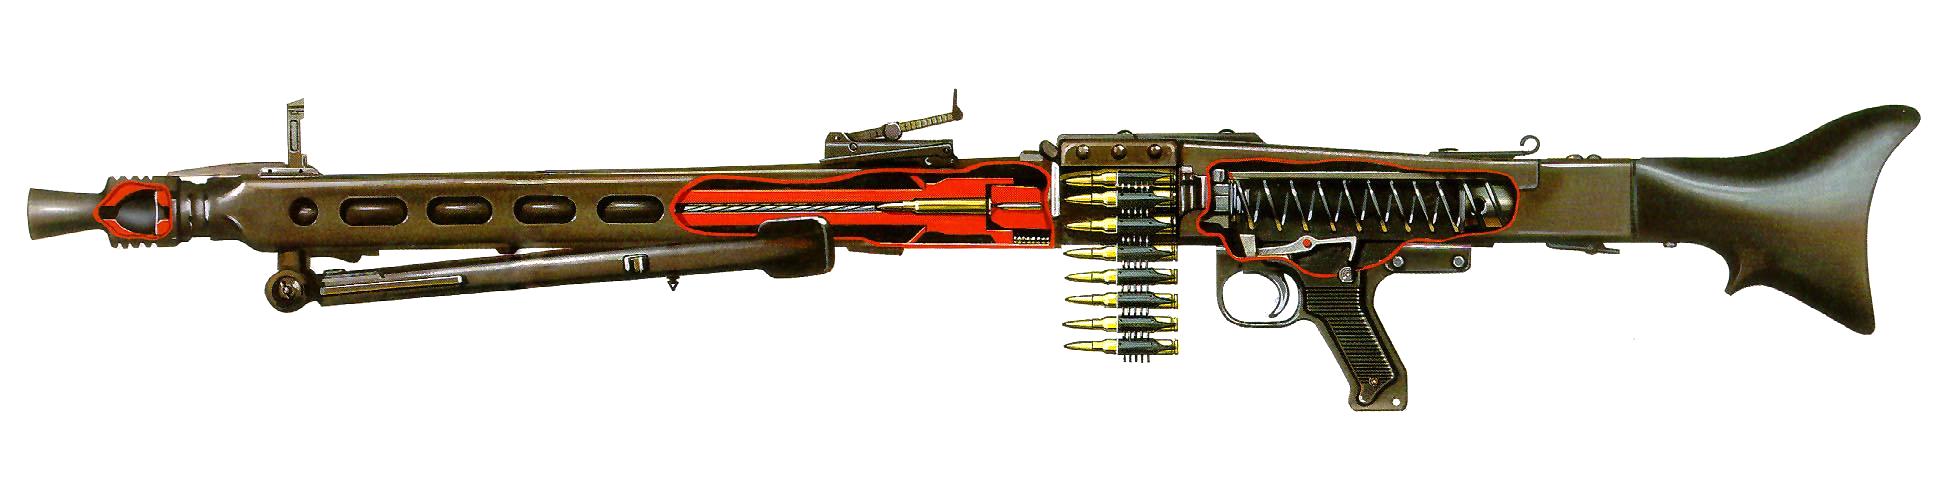 пулемет mg42, оружие, война